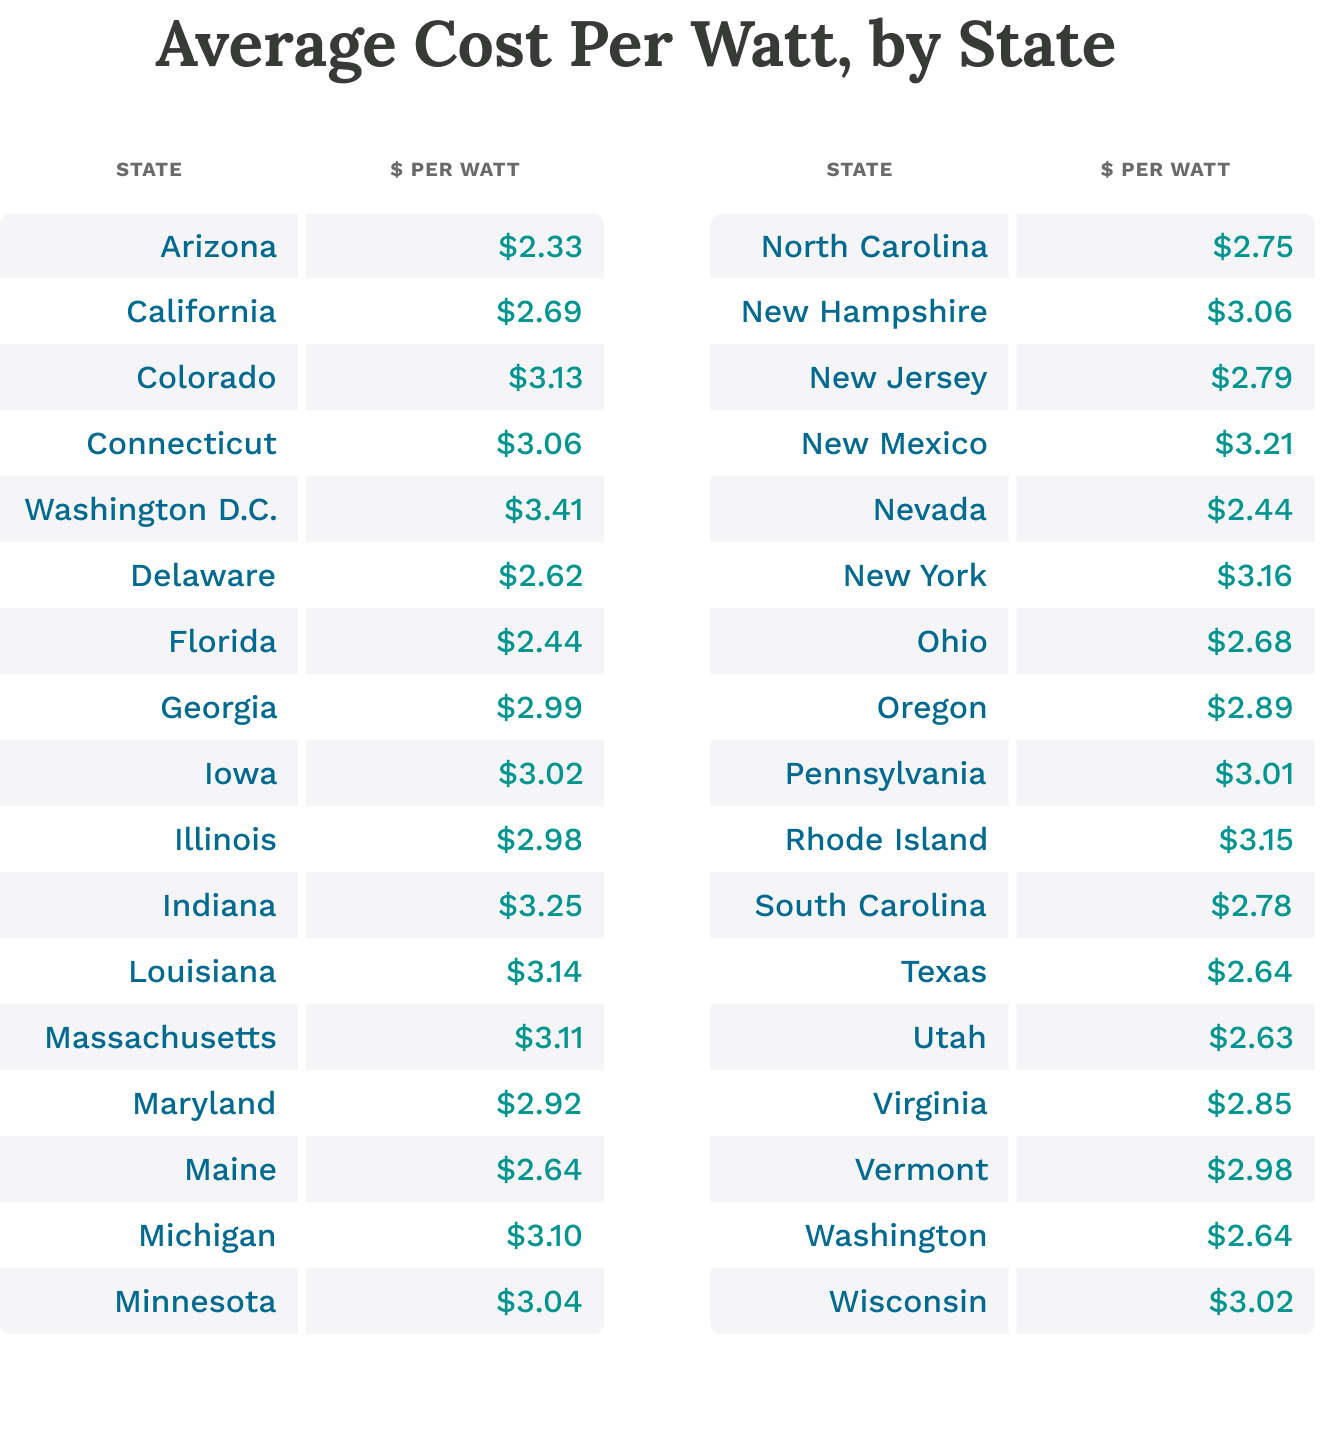 Table showing cost per watt per state